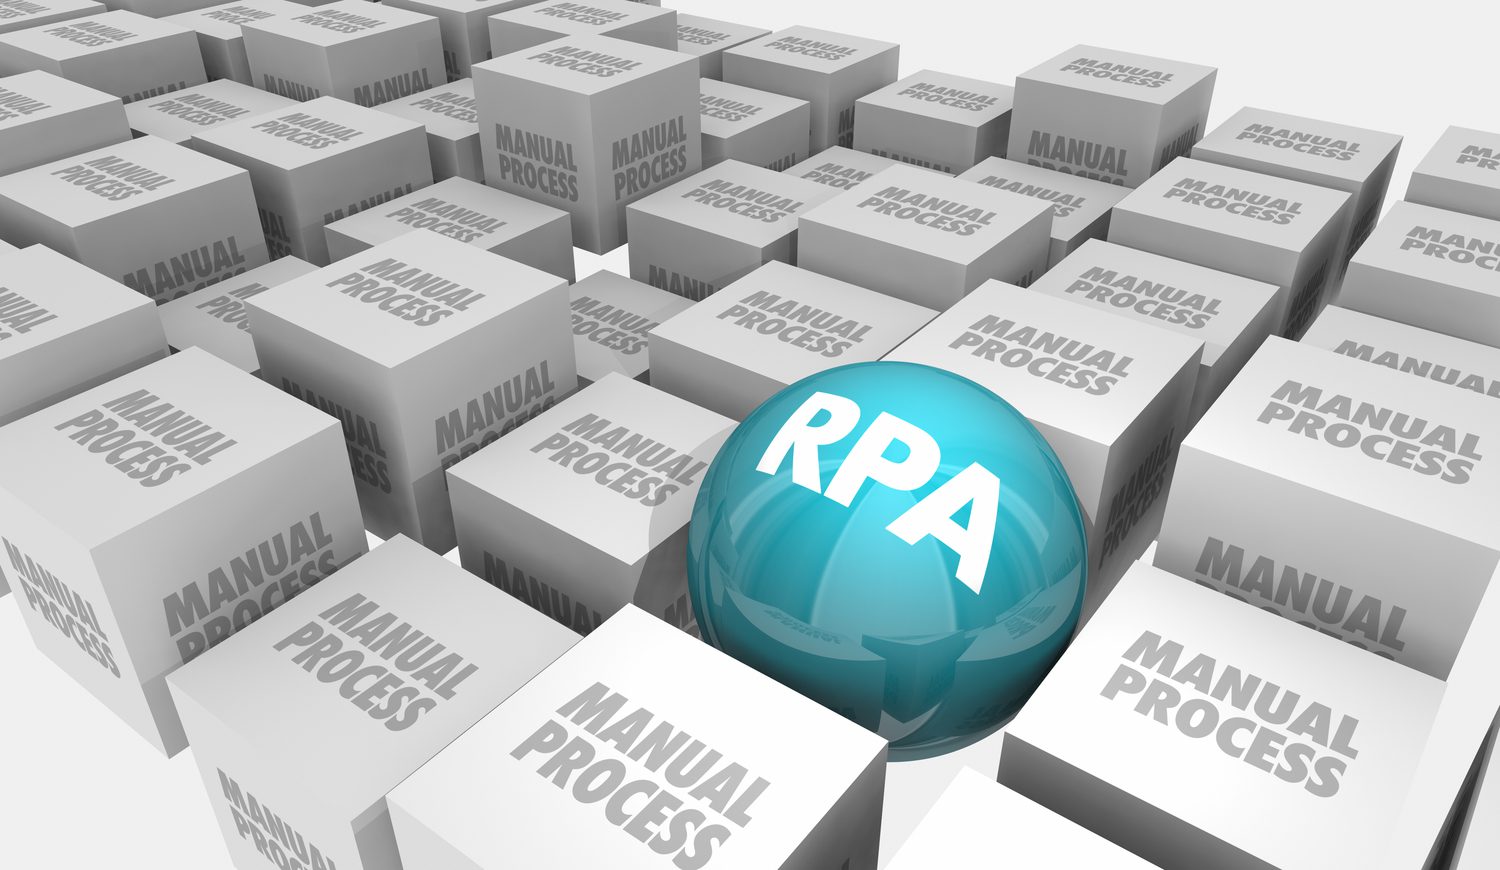 RPA Robotic Process Automation